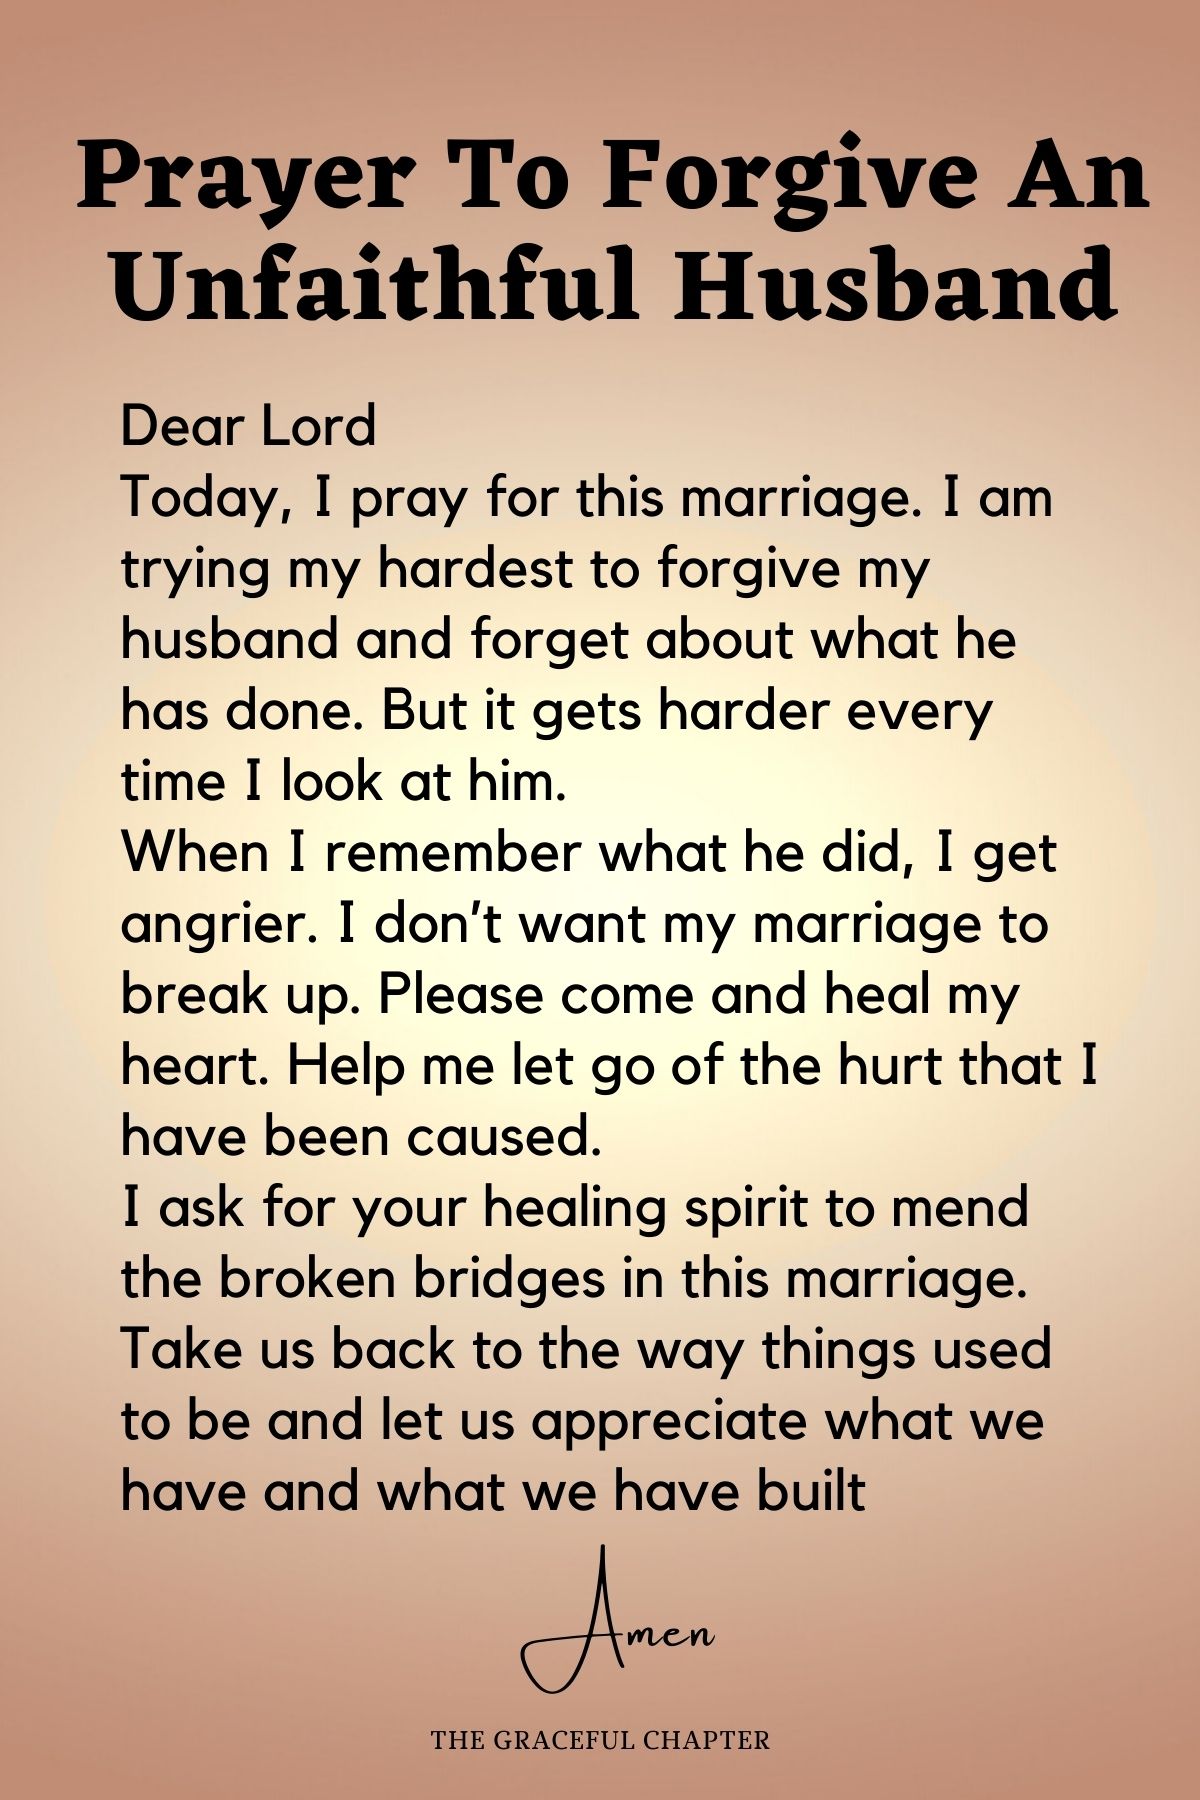 Prayer to forgive an unfaithful husband